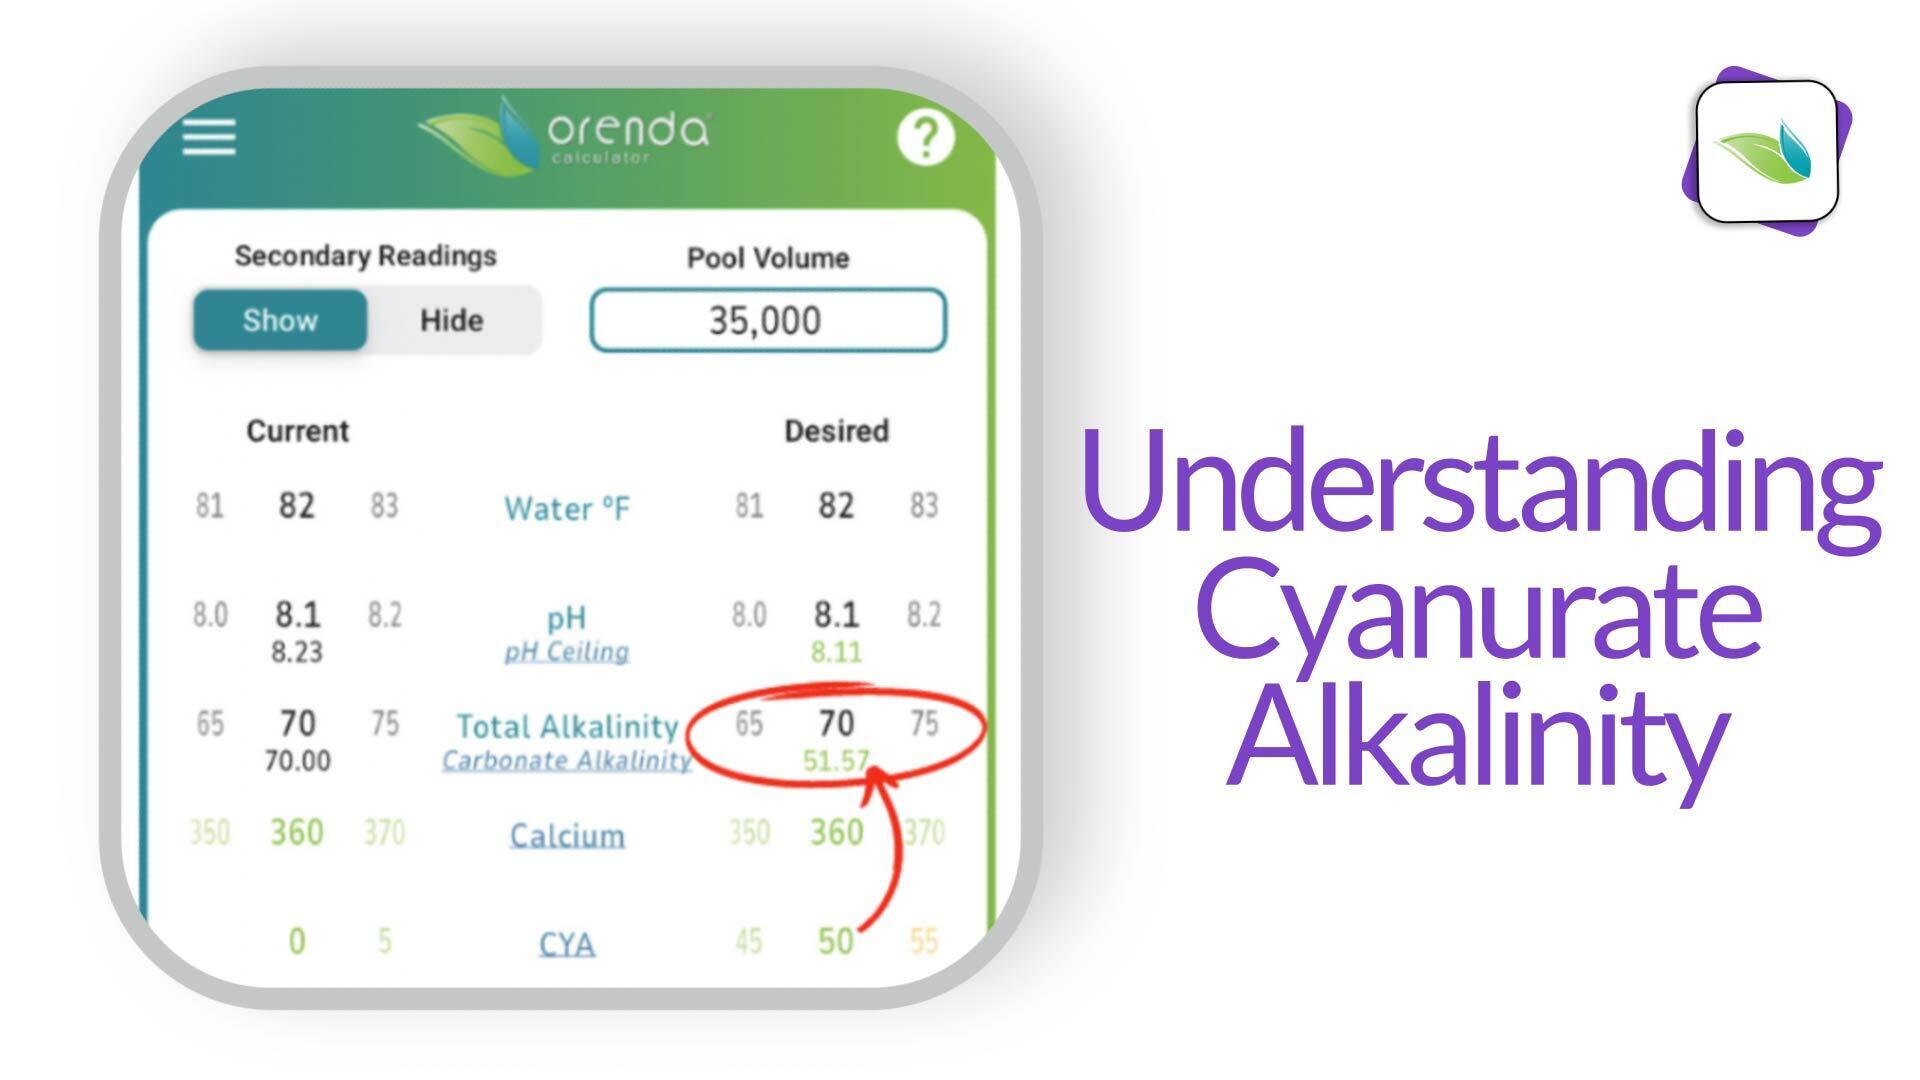 cyanurate alkalinity in pools, cya and alkalinity, orenda calculator